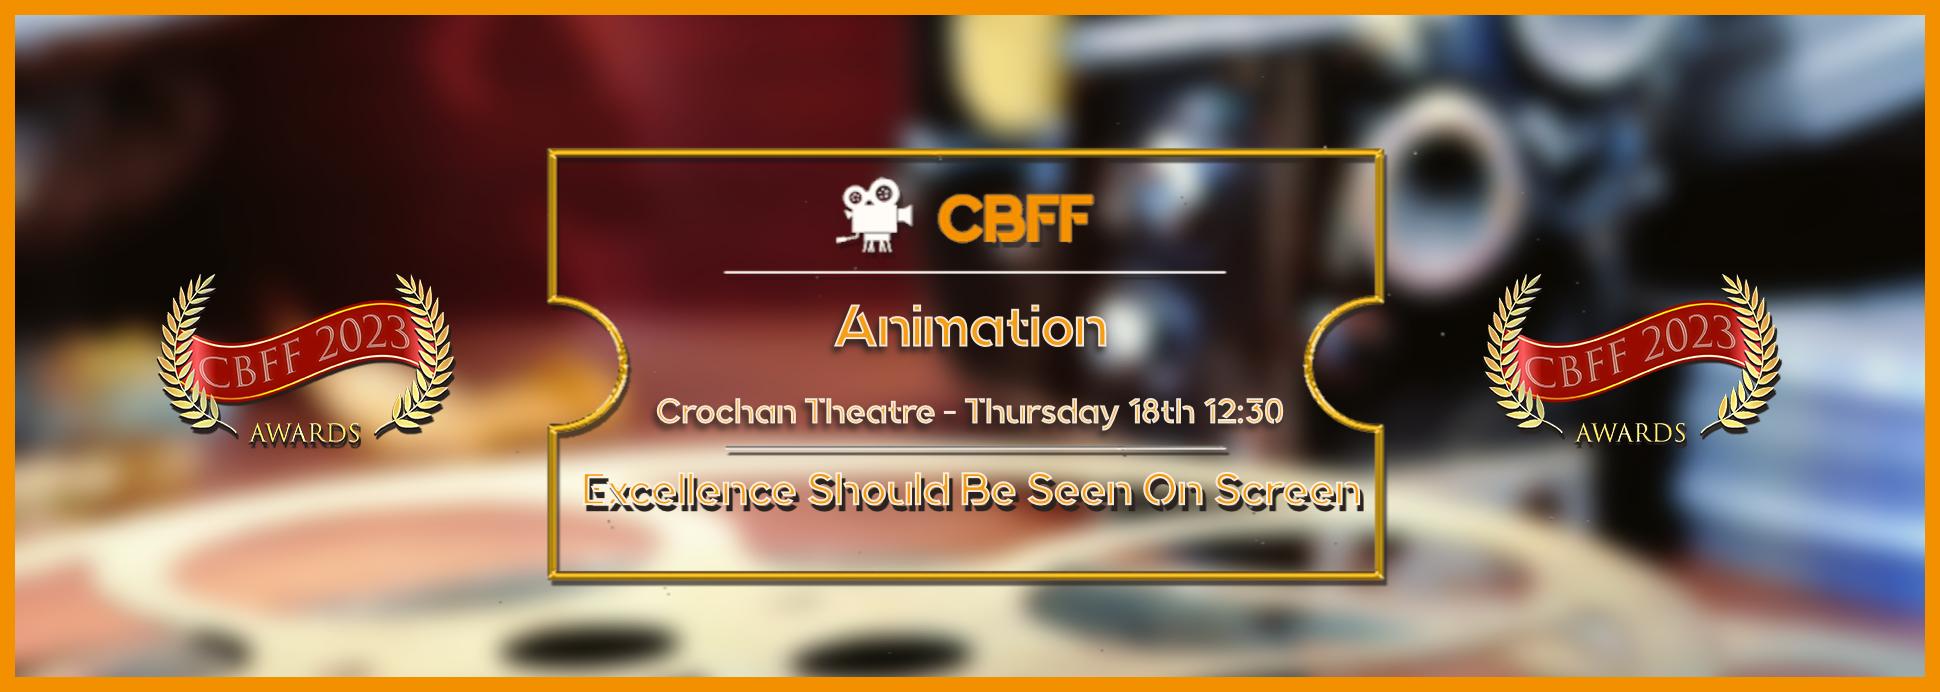 Crochan Theatre - Animation 18th 12:30